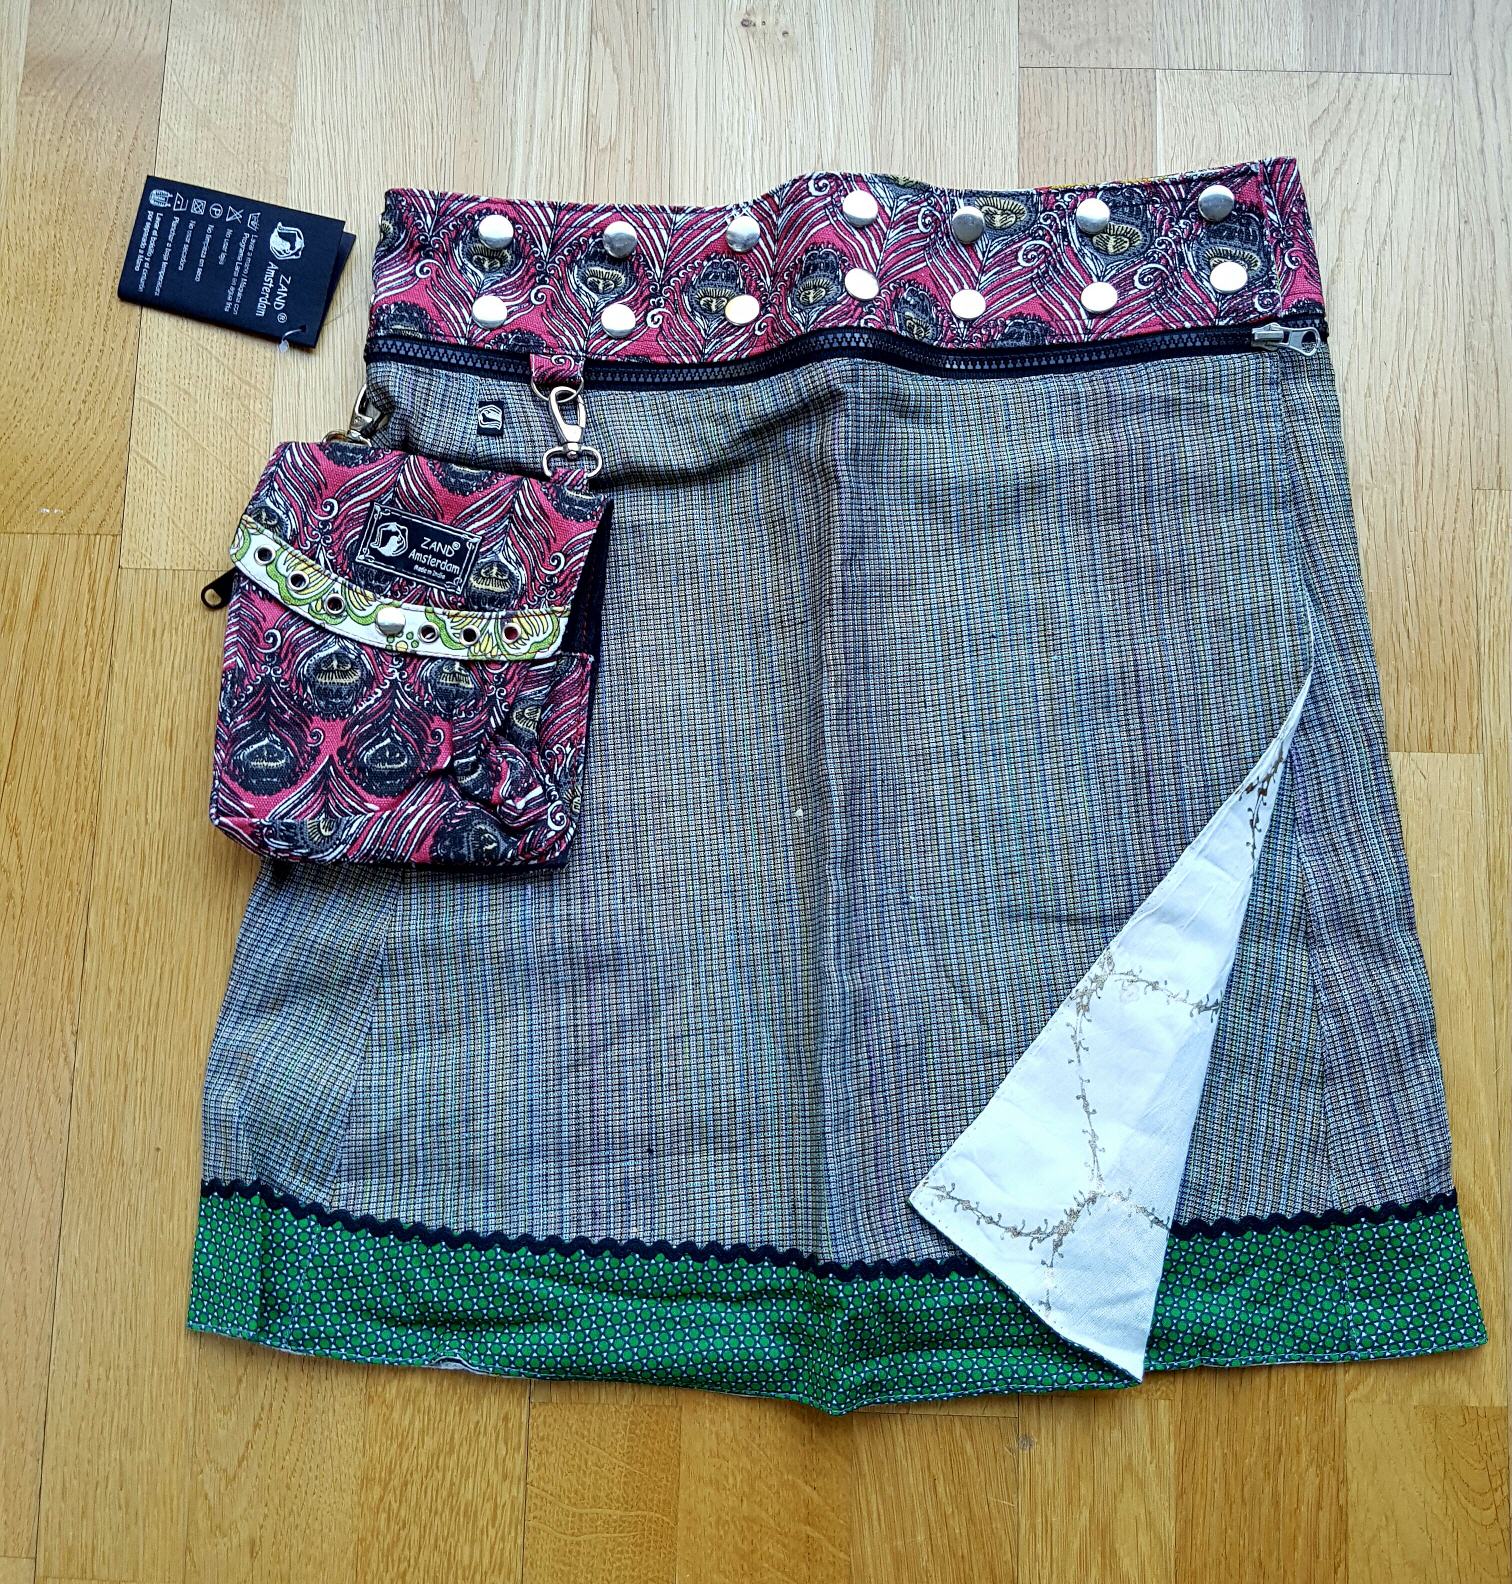 Zand Amsterdam, flera kjolar i en, grönbrun färgkombination. Free size